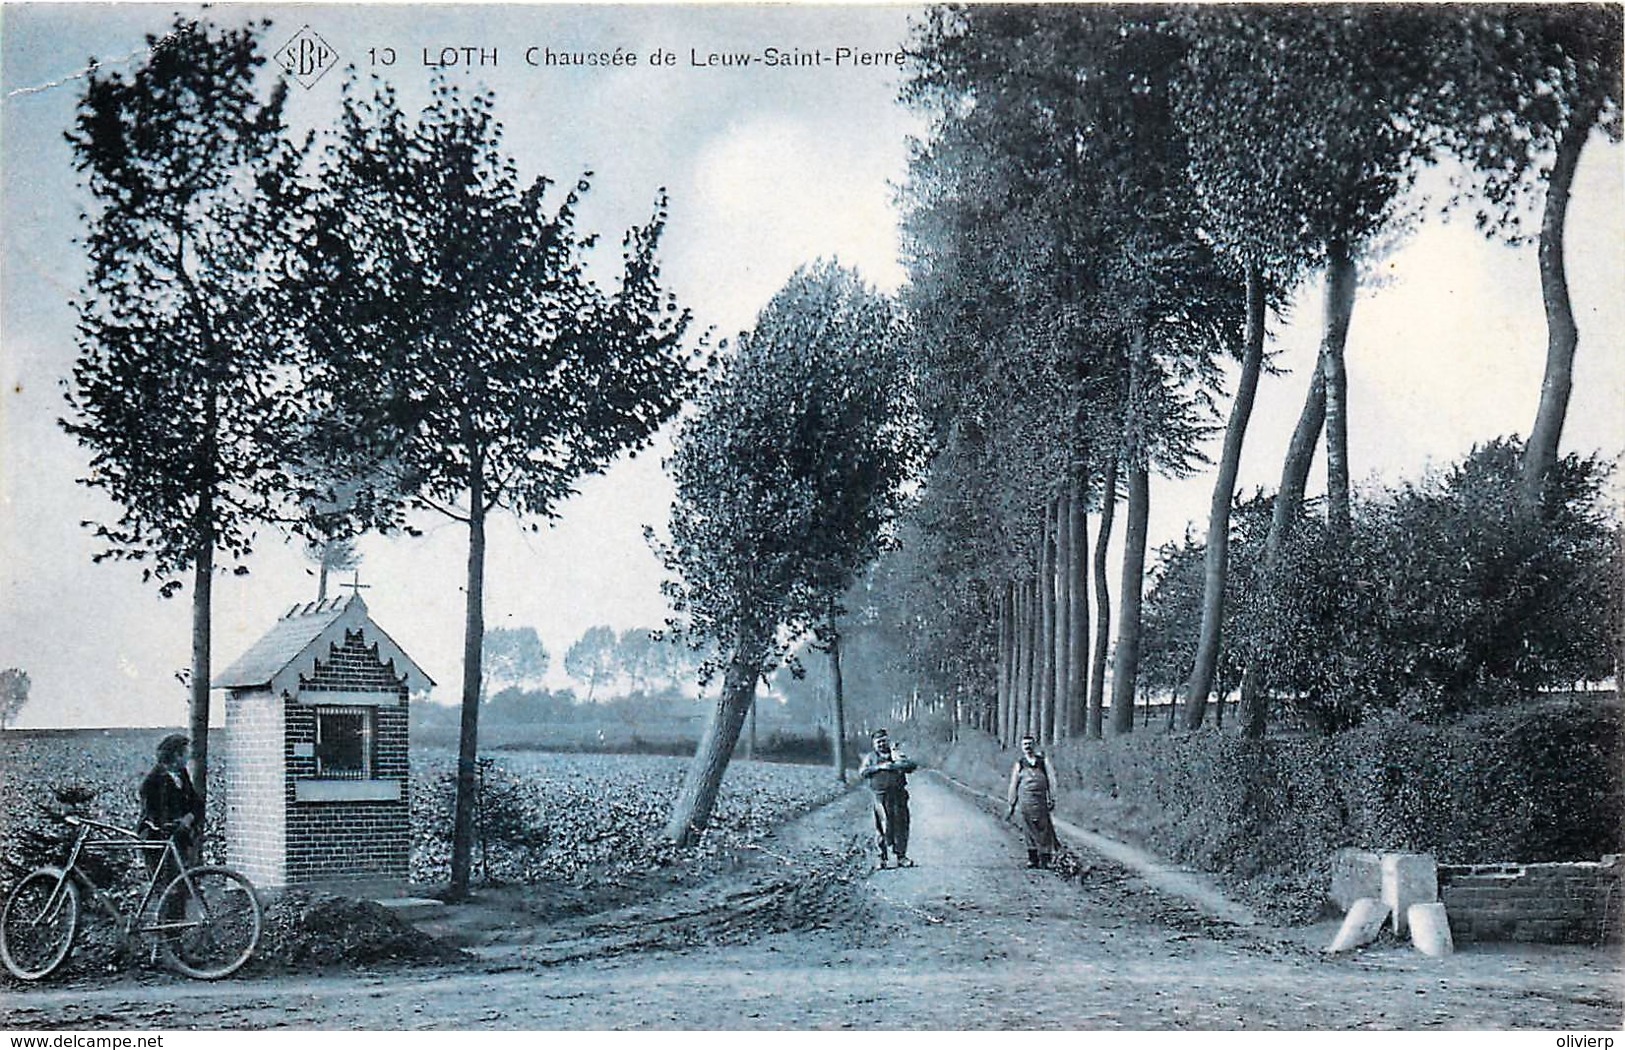 Beersel - Lot - Loth - Chaussée De Leuw Saint-Pierre - Edit. S.B.P. N° 10 - Beersel